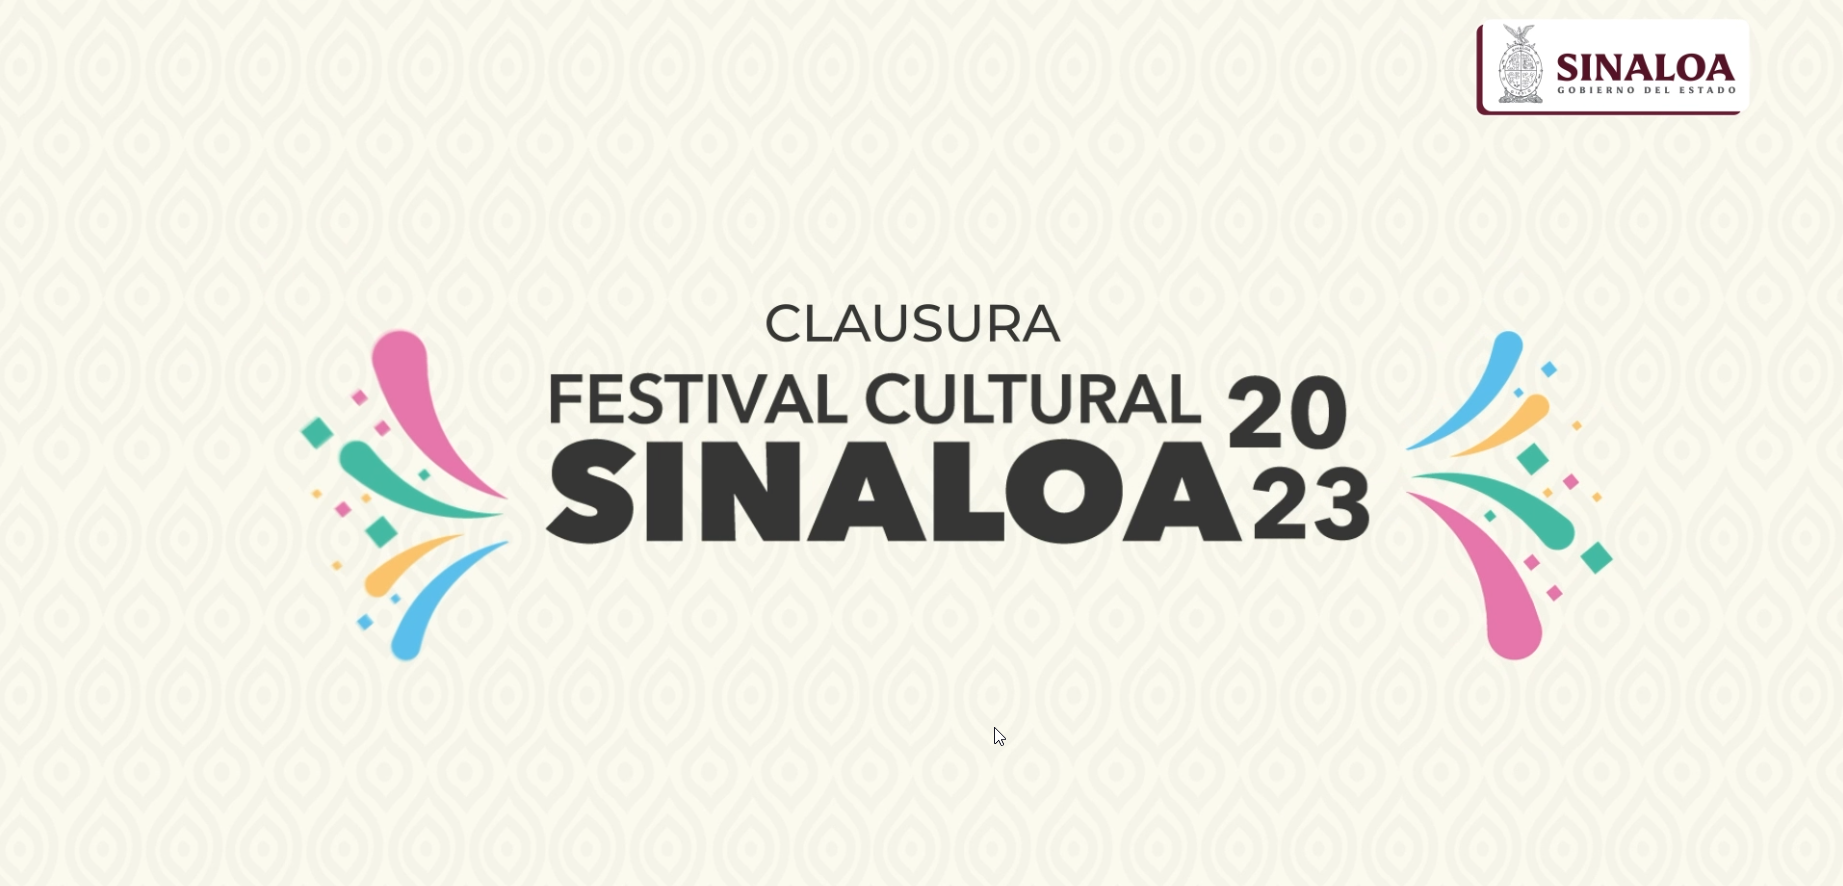 VIDEO CLAUSURA FESTIVAL CULTURAL SINALOA 2023 HD